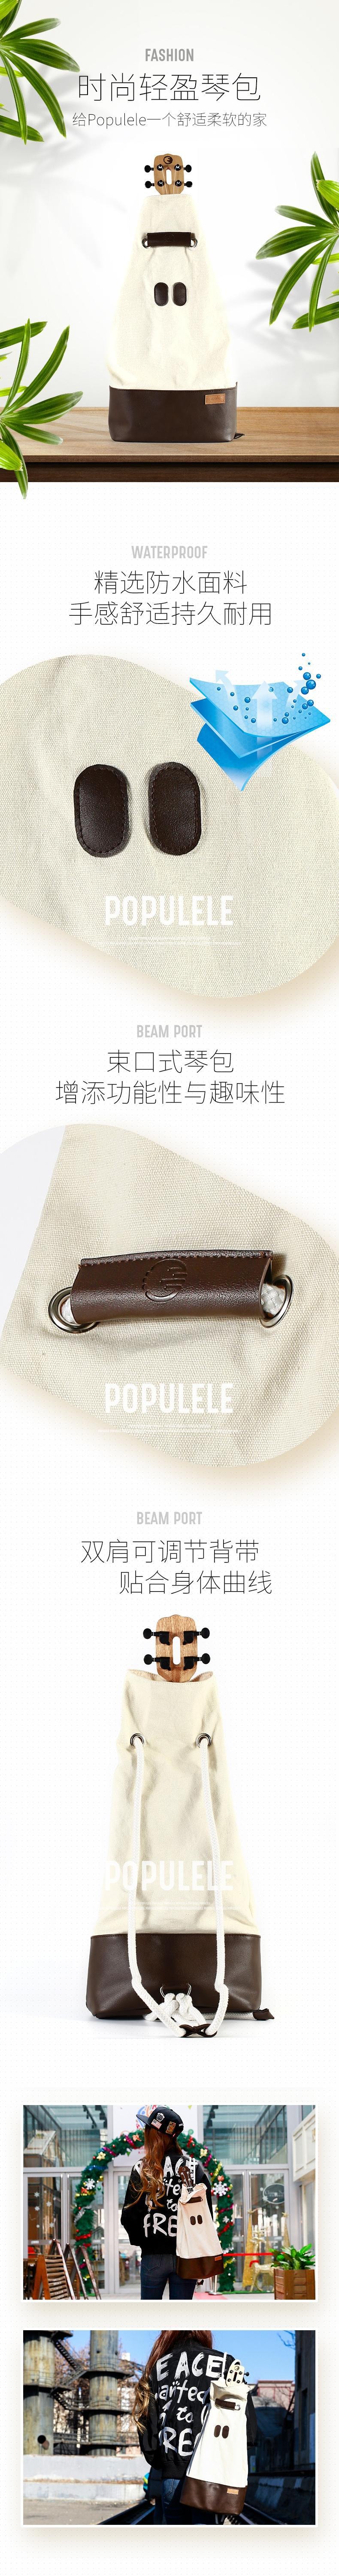 Populele2尤克里里23寸原装帆布背包 白色【加拿大直邮】